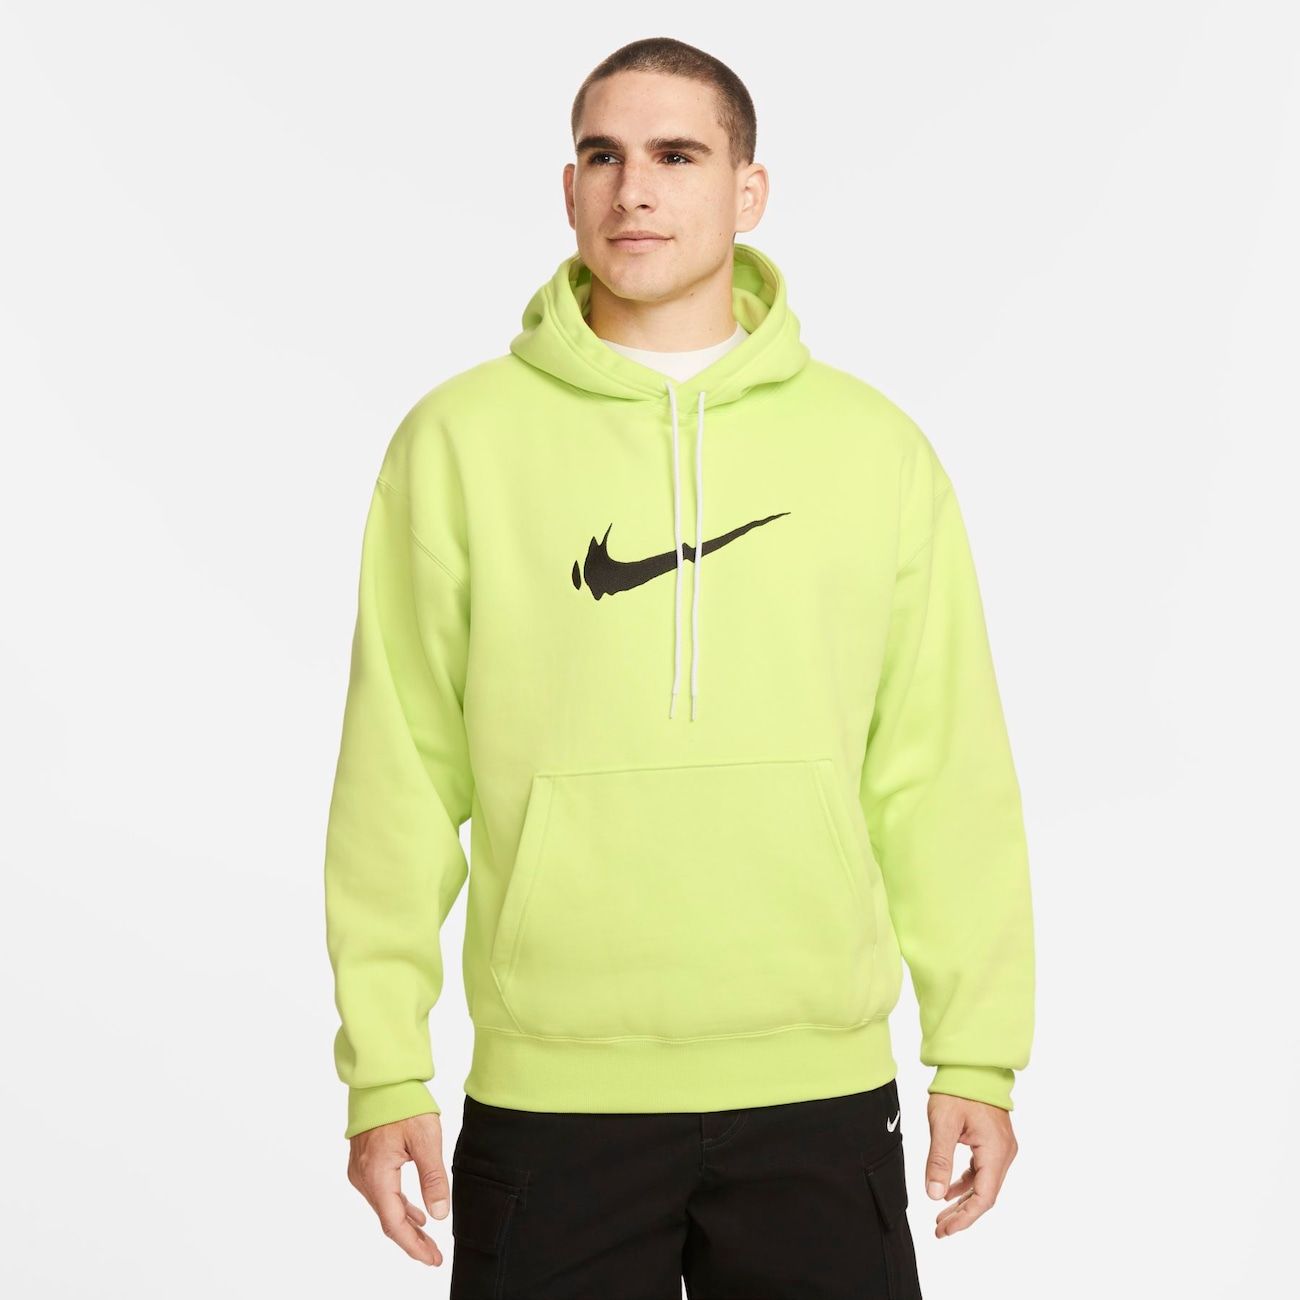 Blusão Nike SB Fleece Copyshop Swoosh Unissex